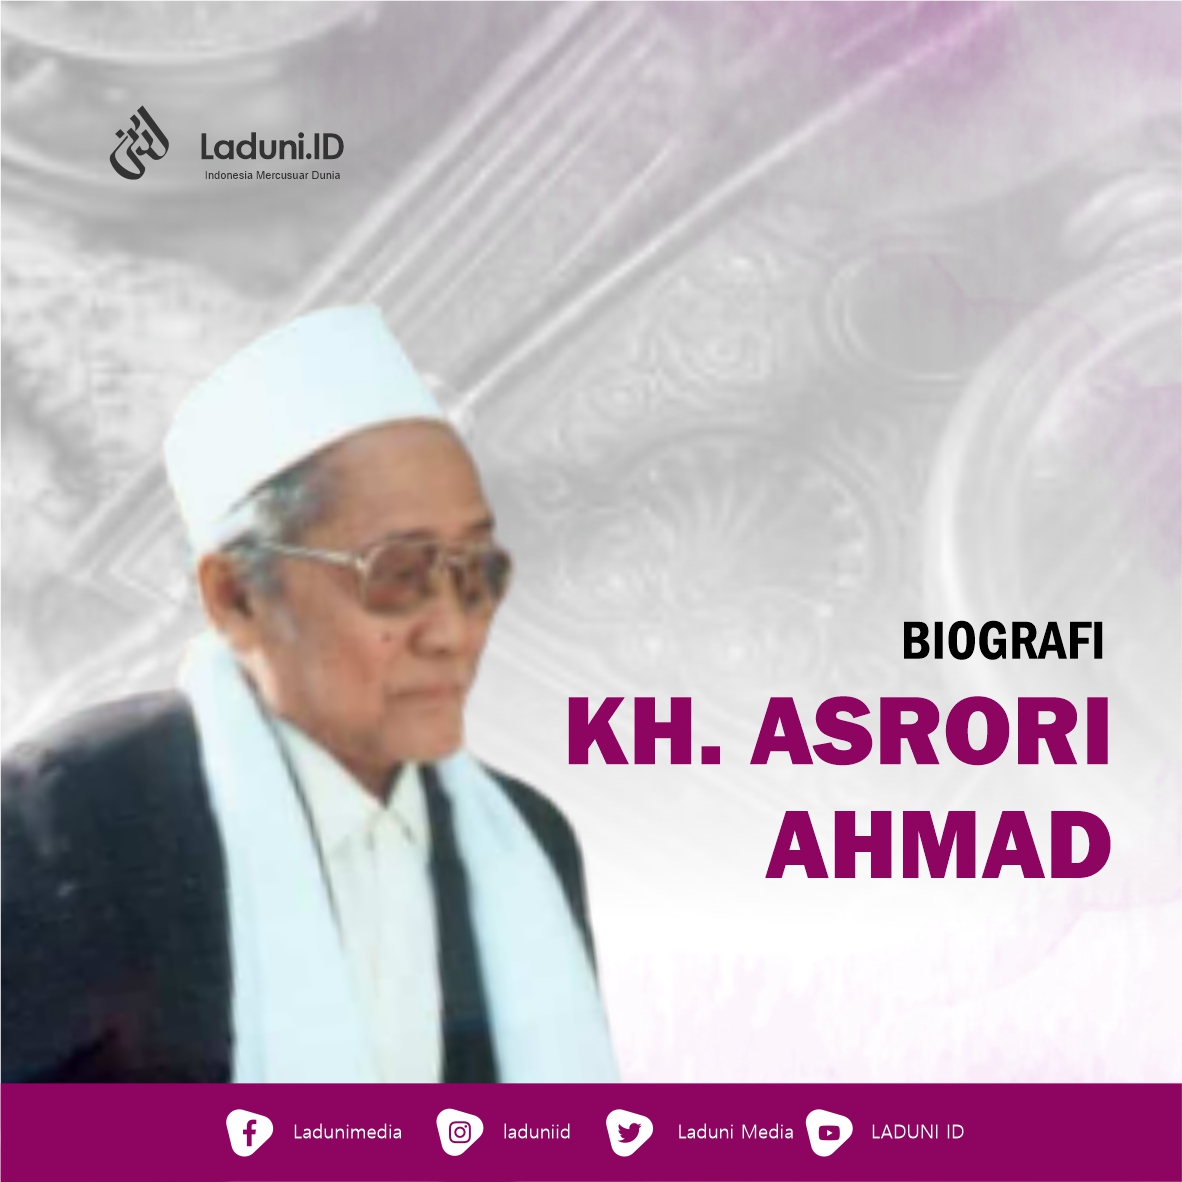 Biografi KH. Asrori Ahmad